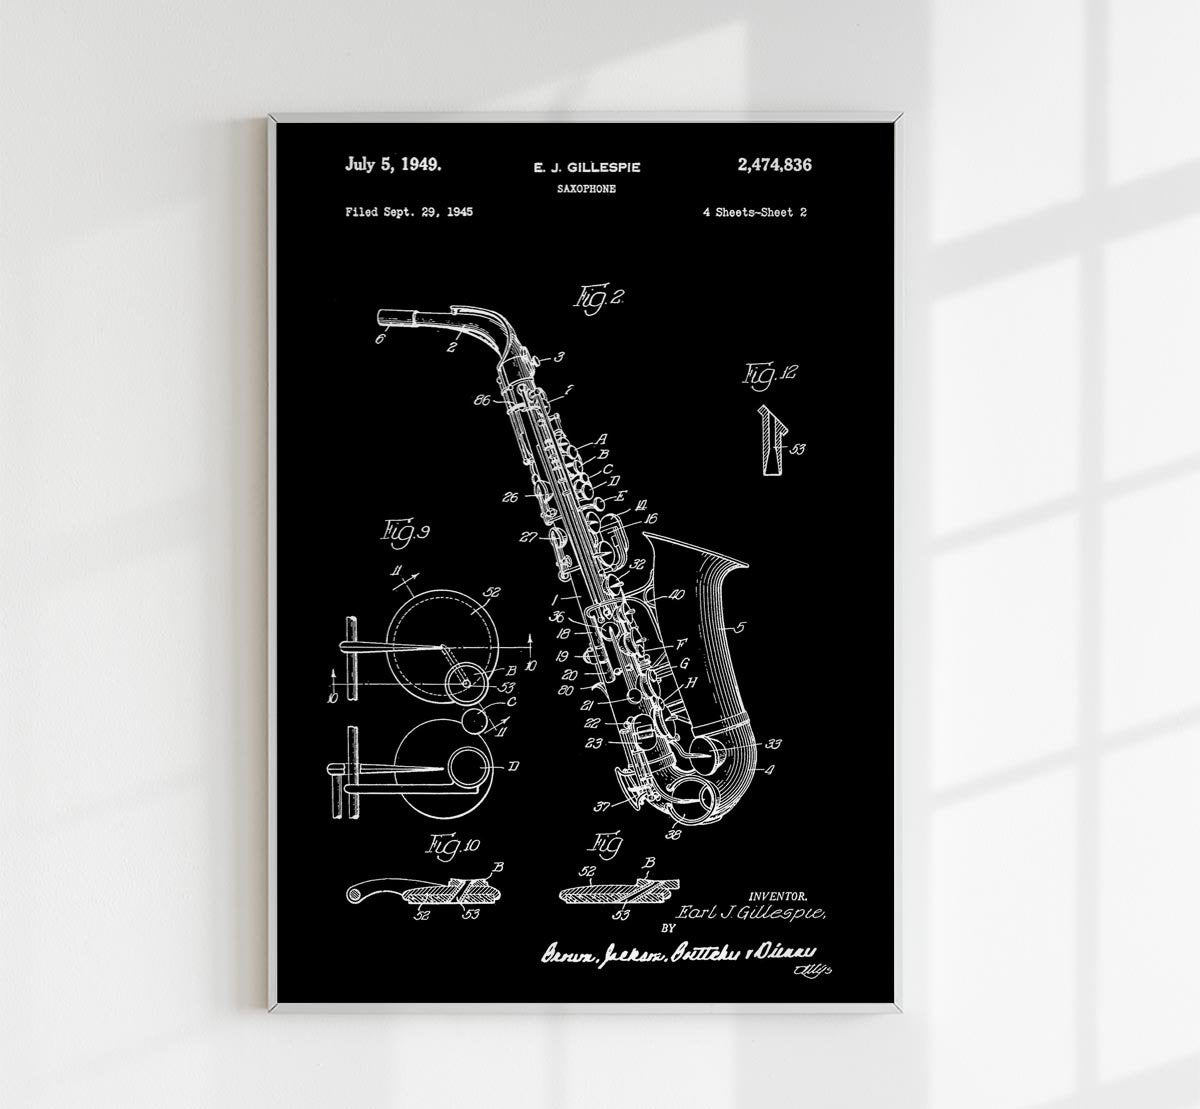 Saxophone B Patent Poster